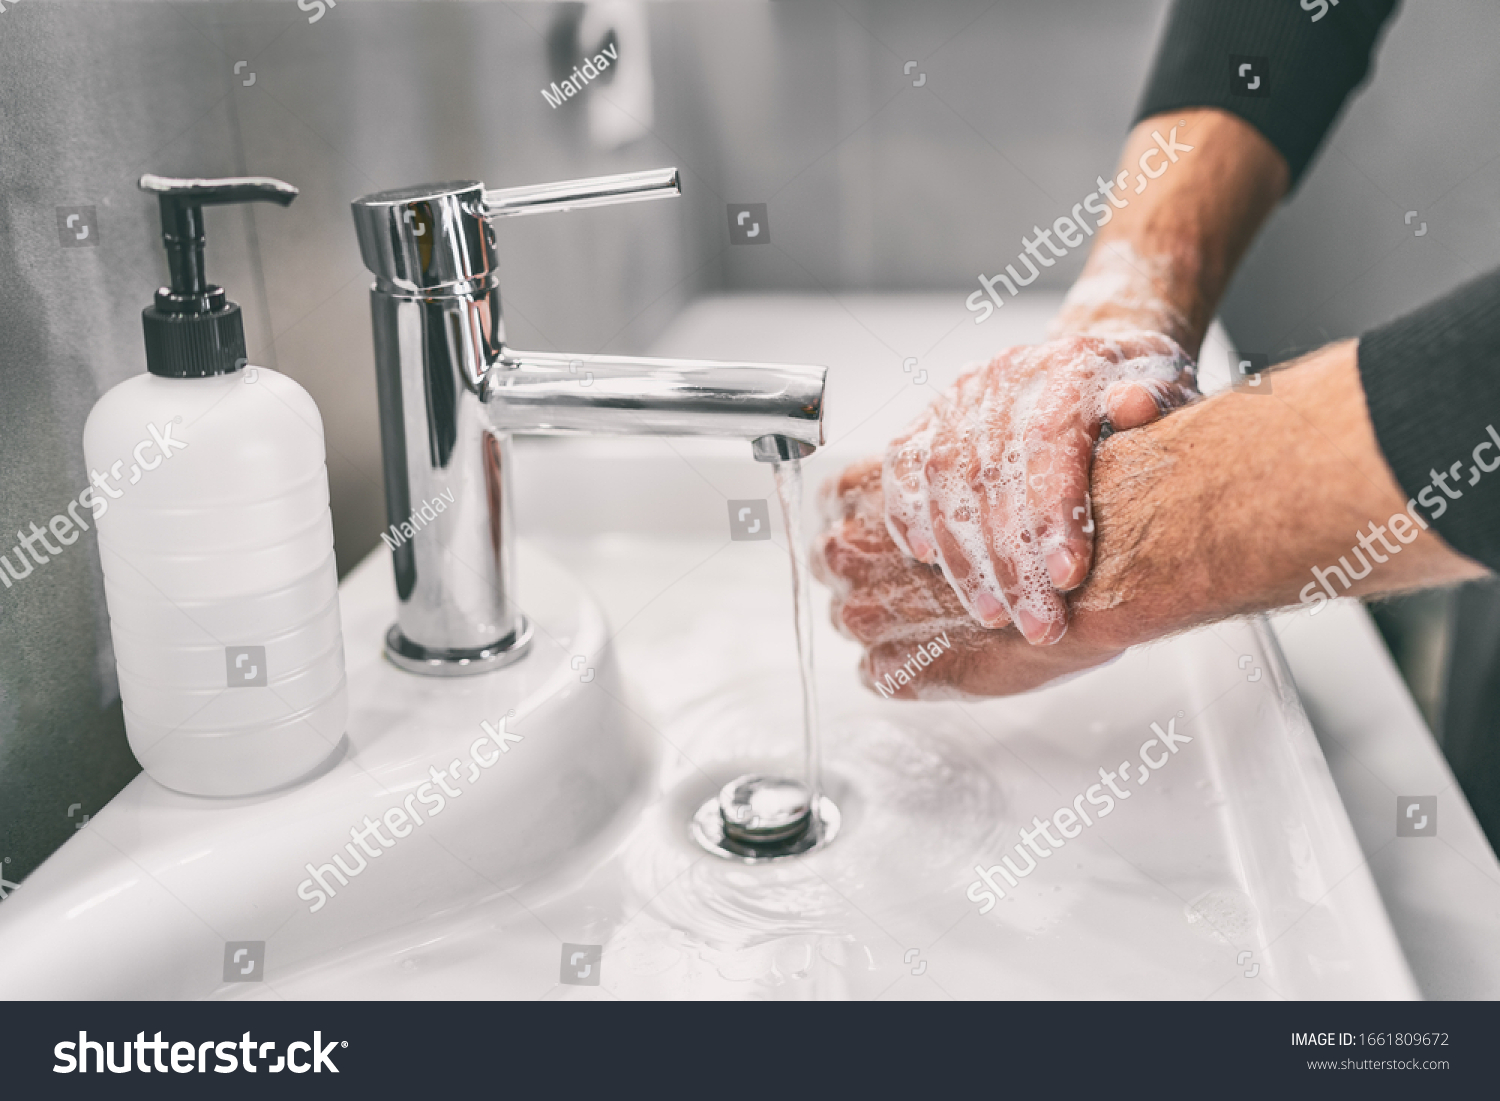 Washing hands rubbing with soap man for corona virus prevention, hygiene to stop spreading coronavirus. #1661809672